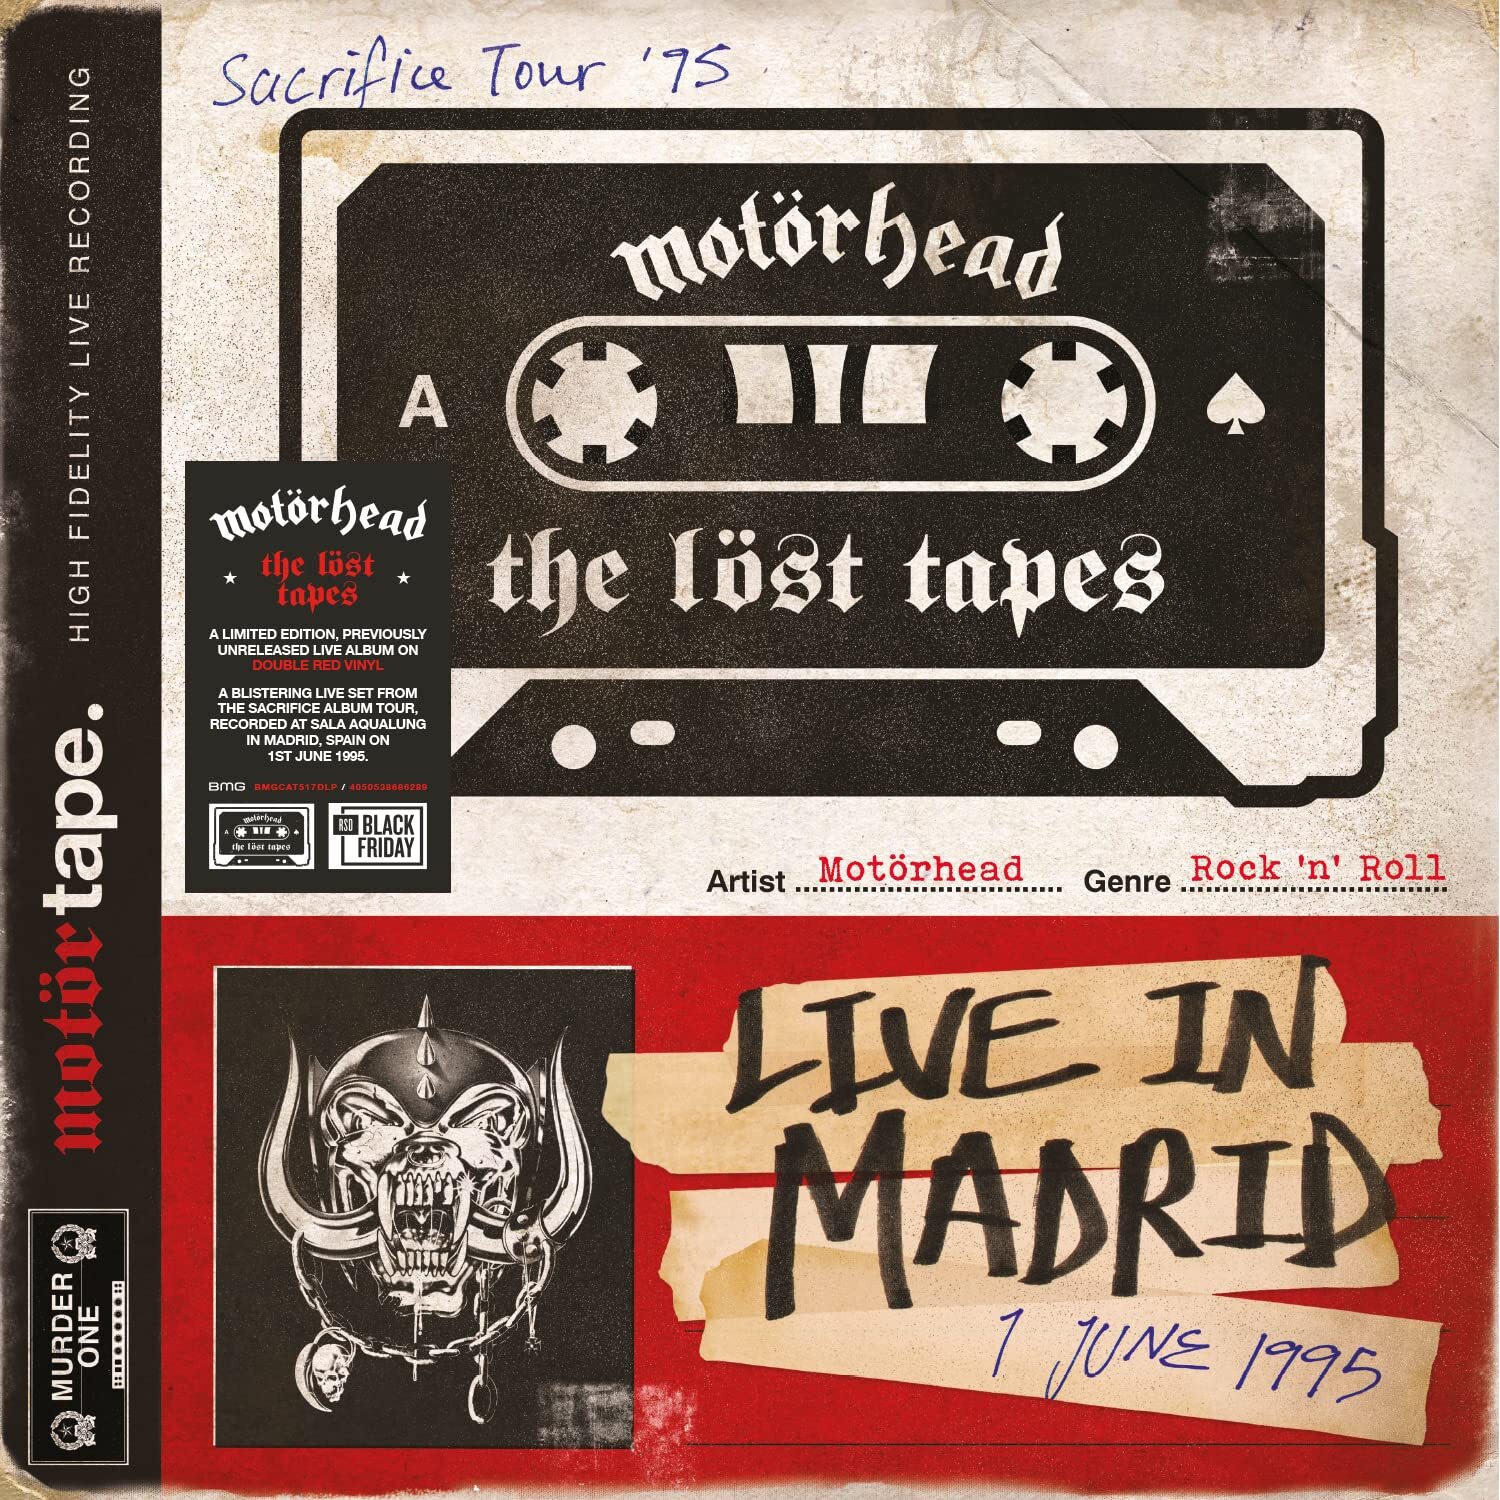 Рок Warner Music Motorhead - The Lost Tapes Vol. 1 Live In Madrid 1 June 1995 (Limited Edition Coloured Vinyl 2LP) рок warner music richard wright wet dream coloured vinyl lp